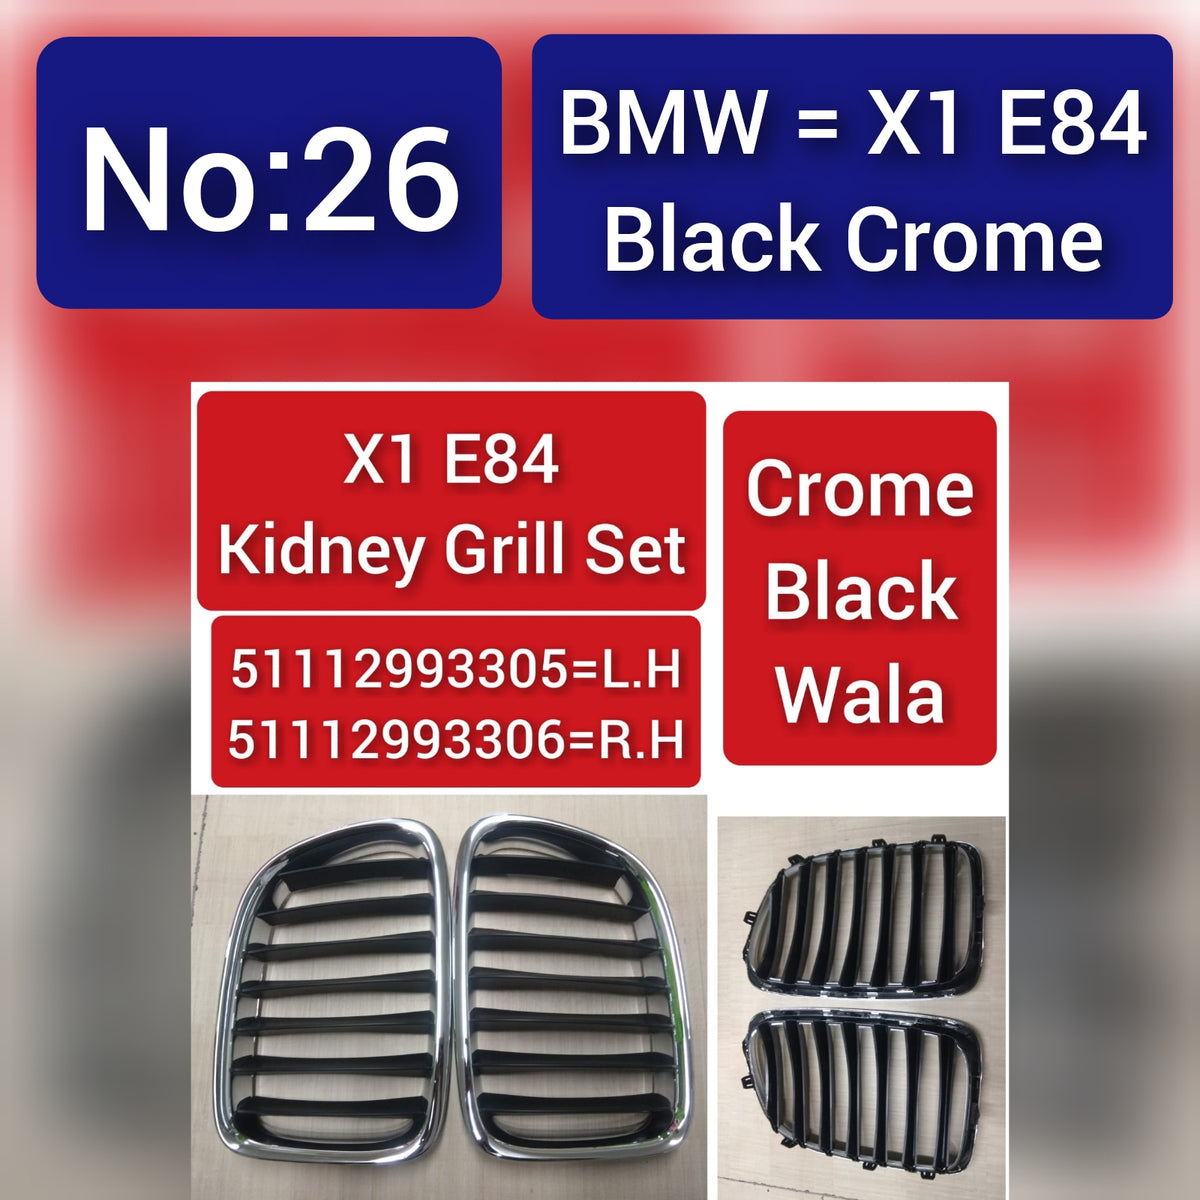 BMW = X1 E84 Black Crome X1 E84 Kidney Grill Set 51112993305=L.H, 51112993306=R.H Crome Black Wala Tag 26